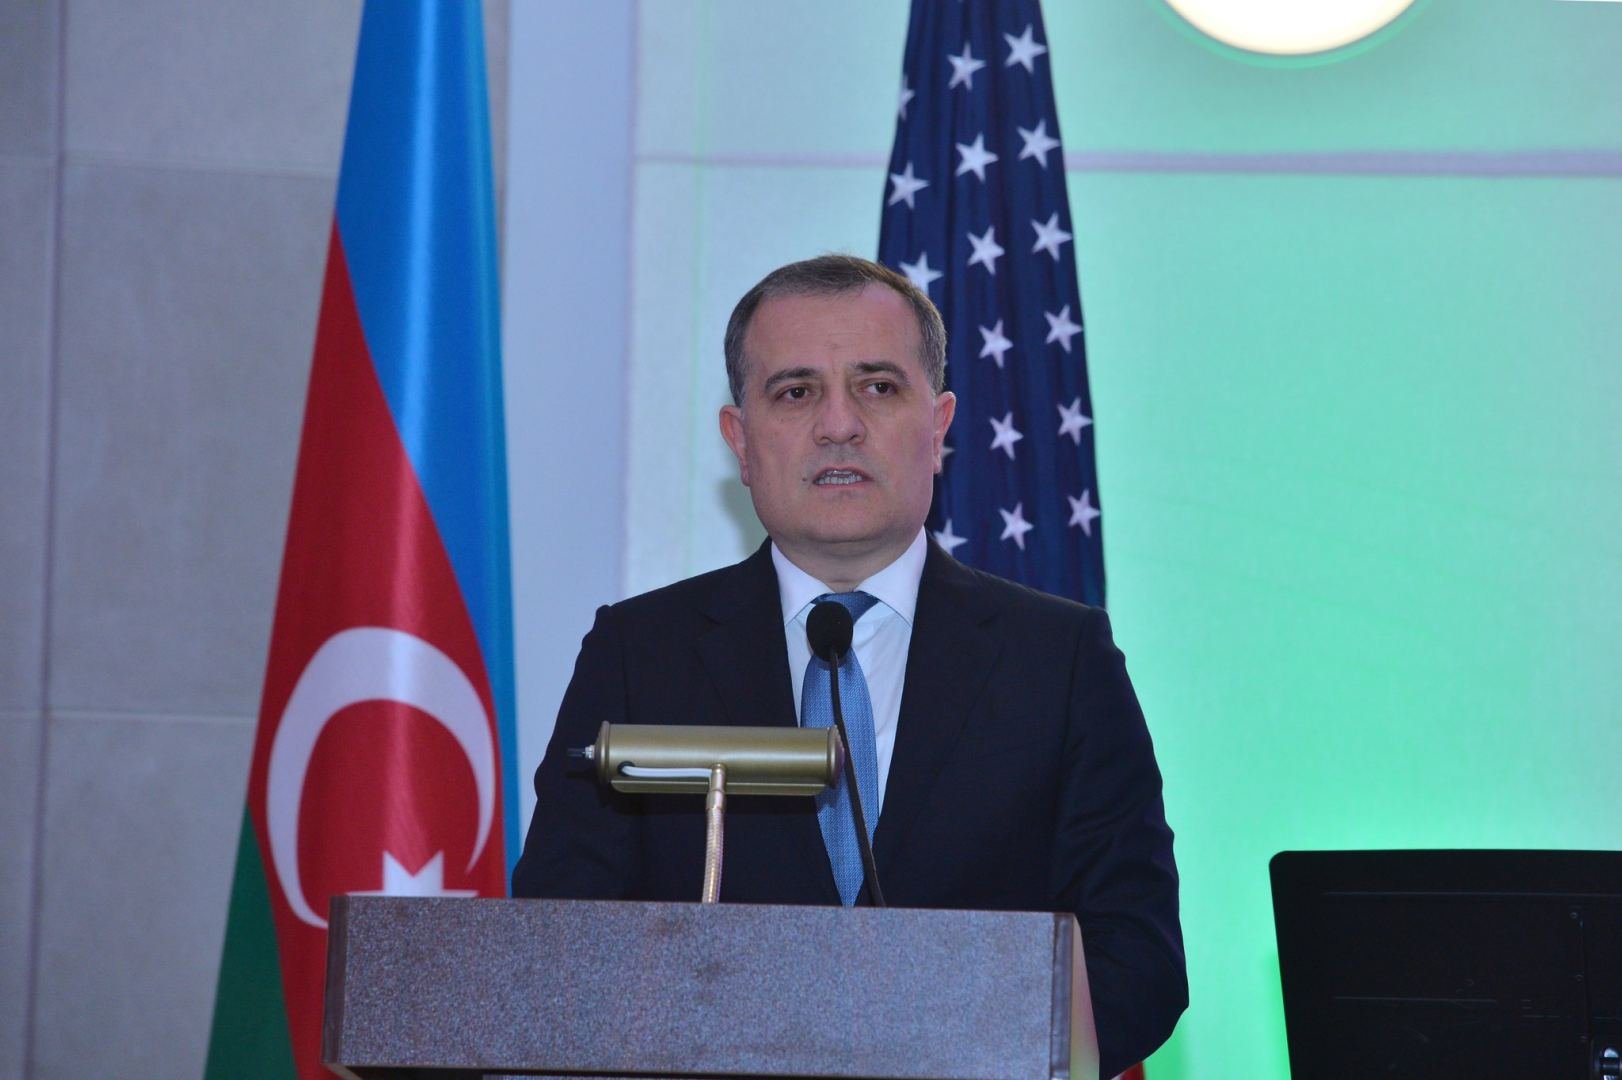 More European countries set to become Azerbaijani gas recipients soon - FM